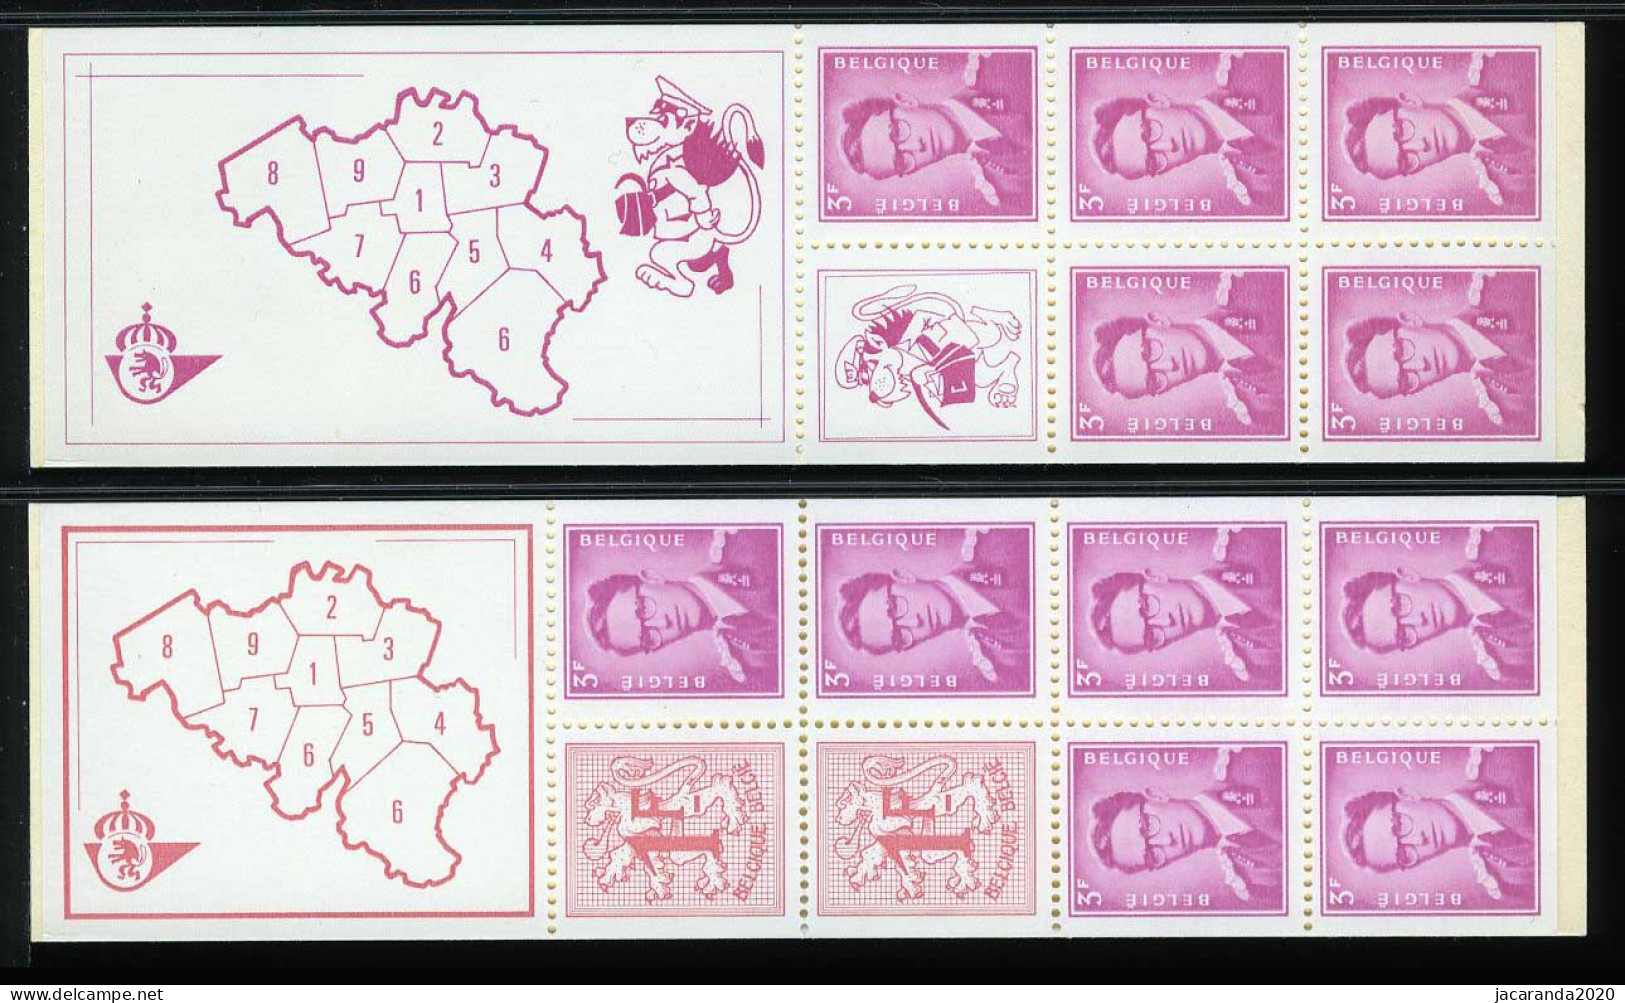 België B1/2 - Koning Boudewijn - Cijfer Op Heraldieke Leeuw - Roi Baudouin - Chiffre Sur Lion Héraldique - 1969 - 1953-2006 Modern [B]